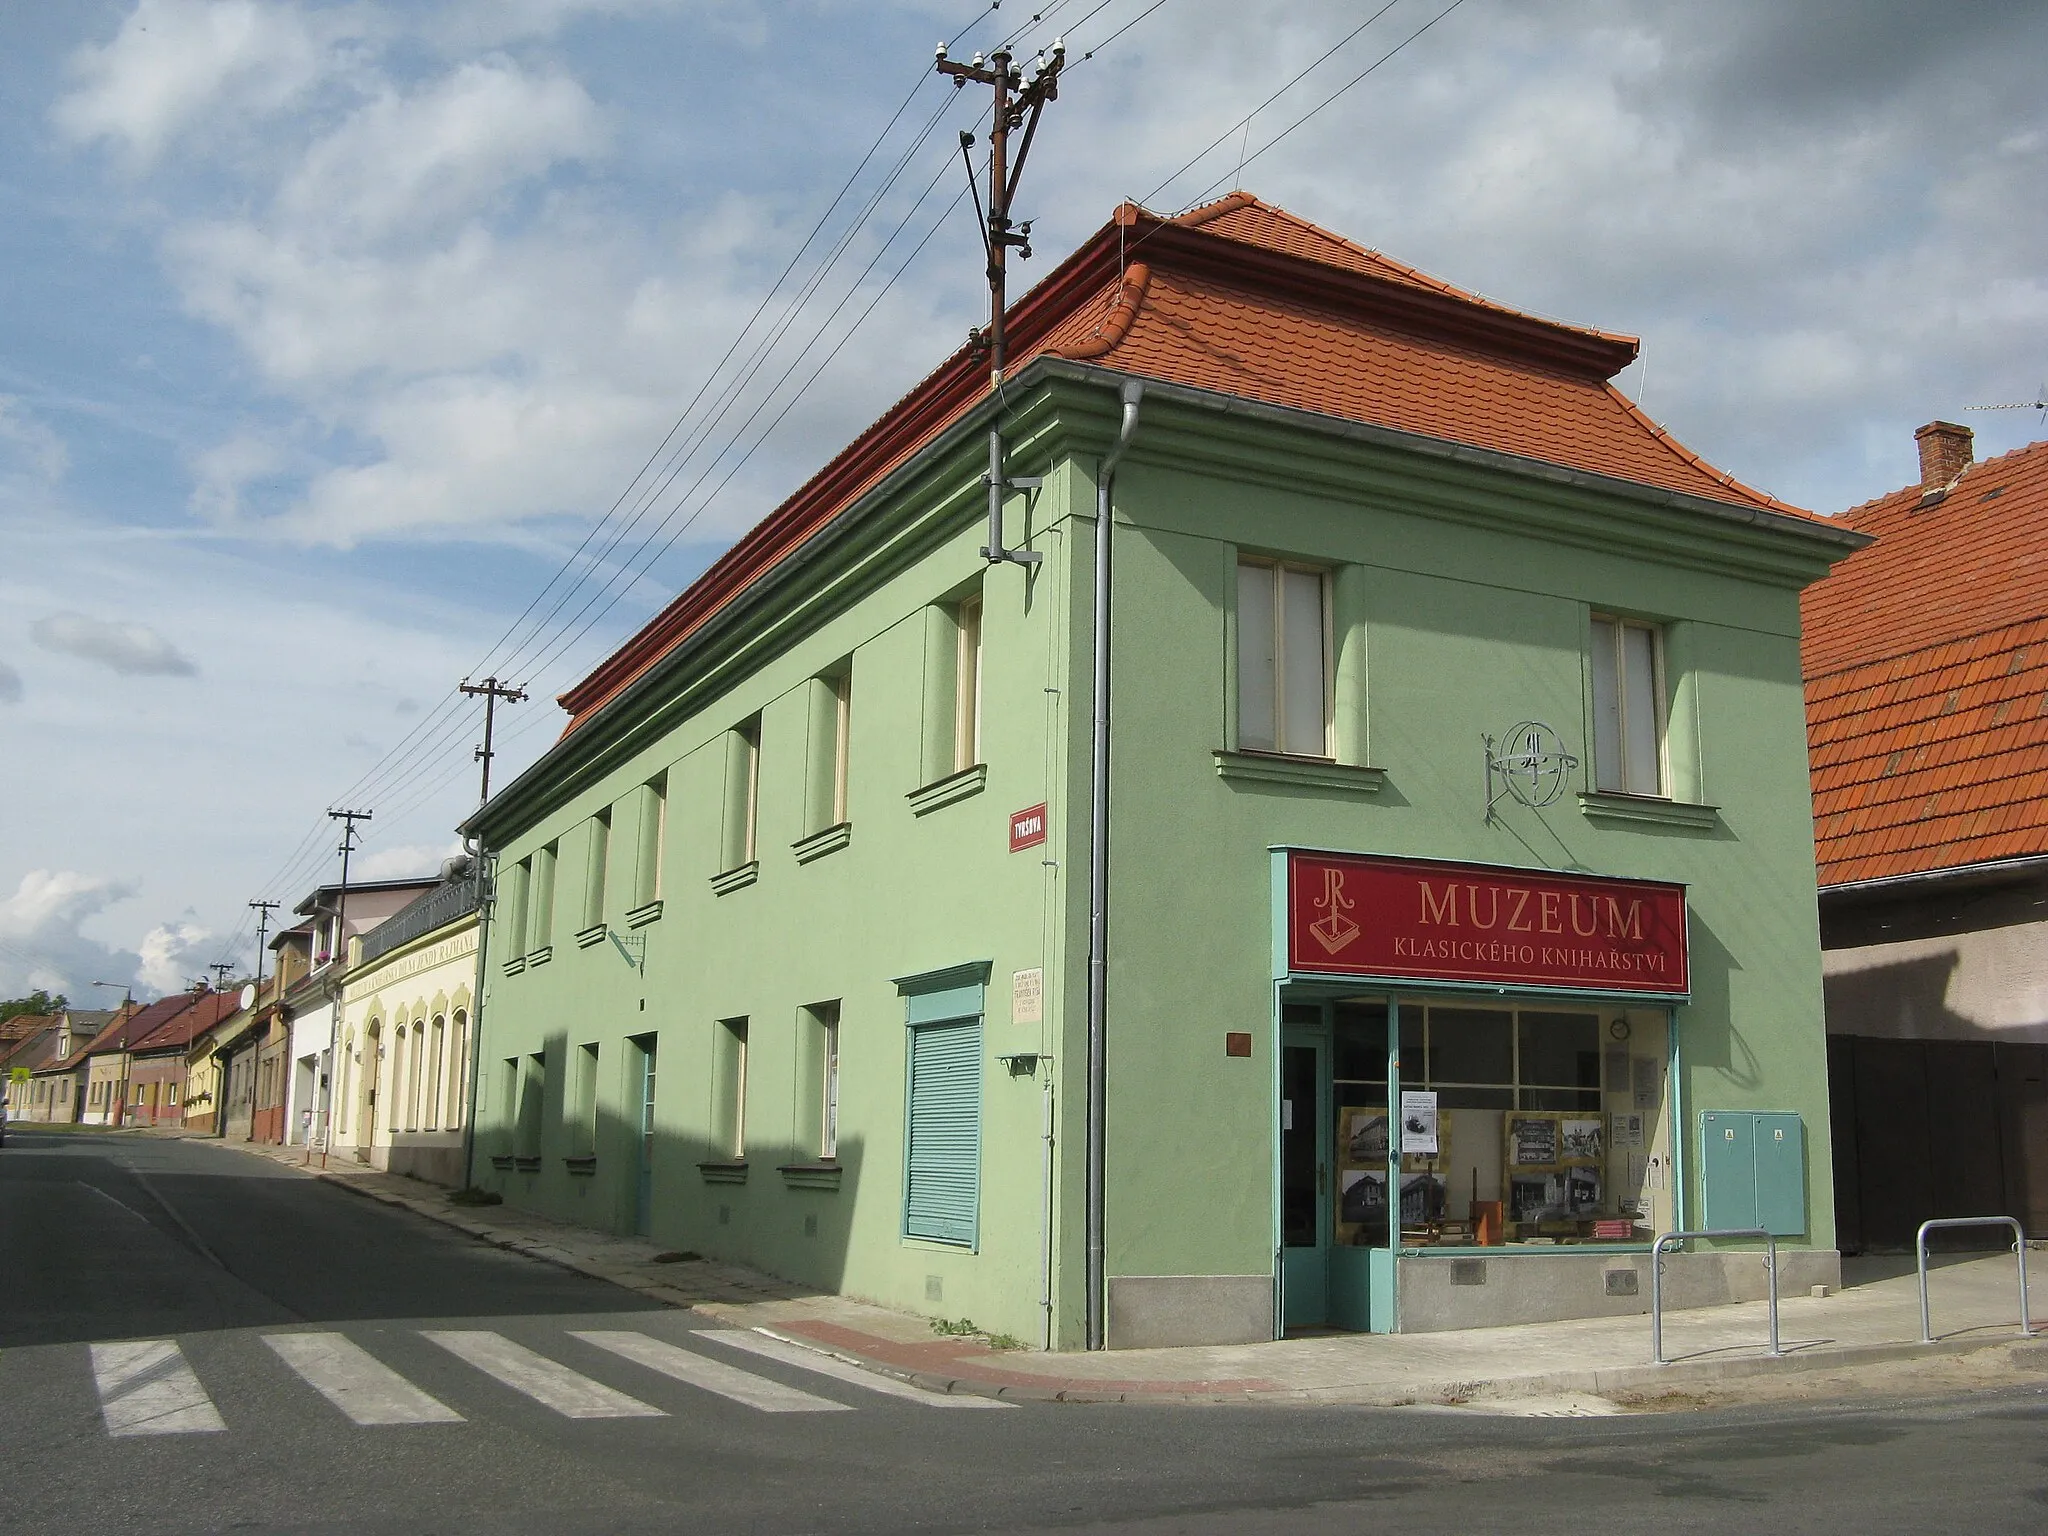 Photo showing: The Classical Bookbinding Museum in Rožďalovice town, Czech Republic, the main entrance